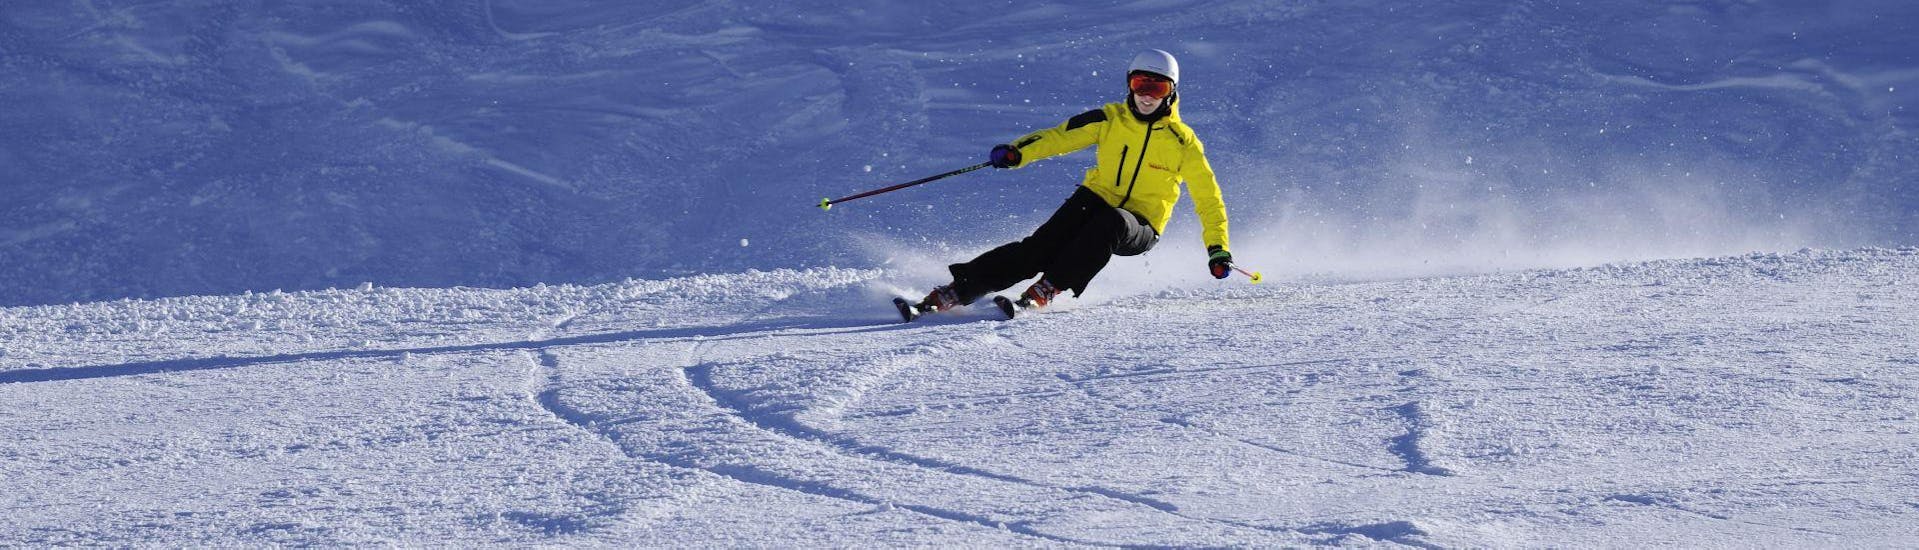 Skikurs für Jugendliche (12-16 J.) aller Levels mit Skischule Ecki Kober Brauneck-Lenggries - Hero image